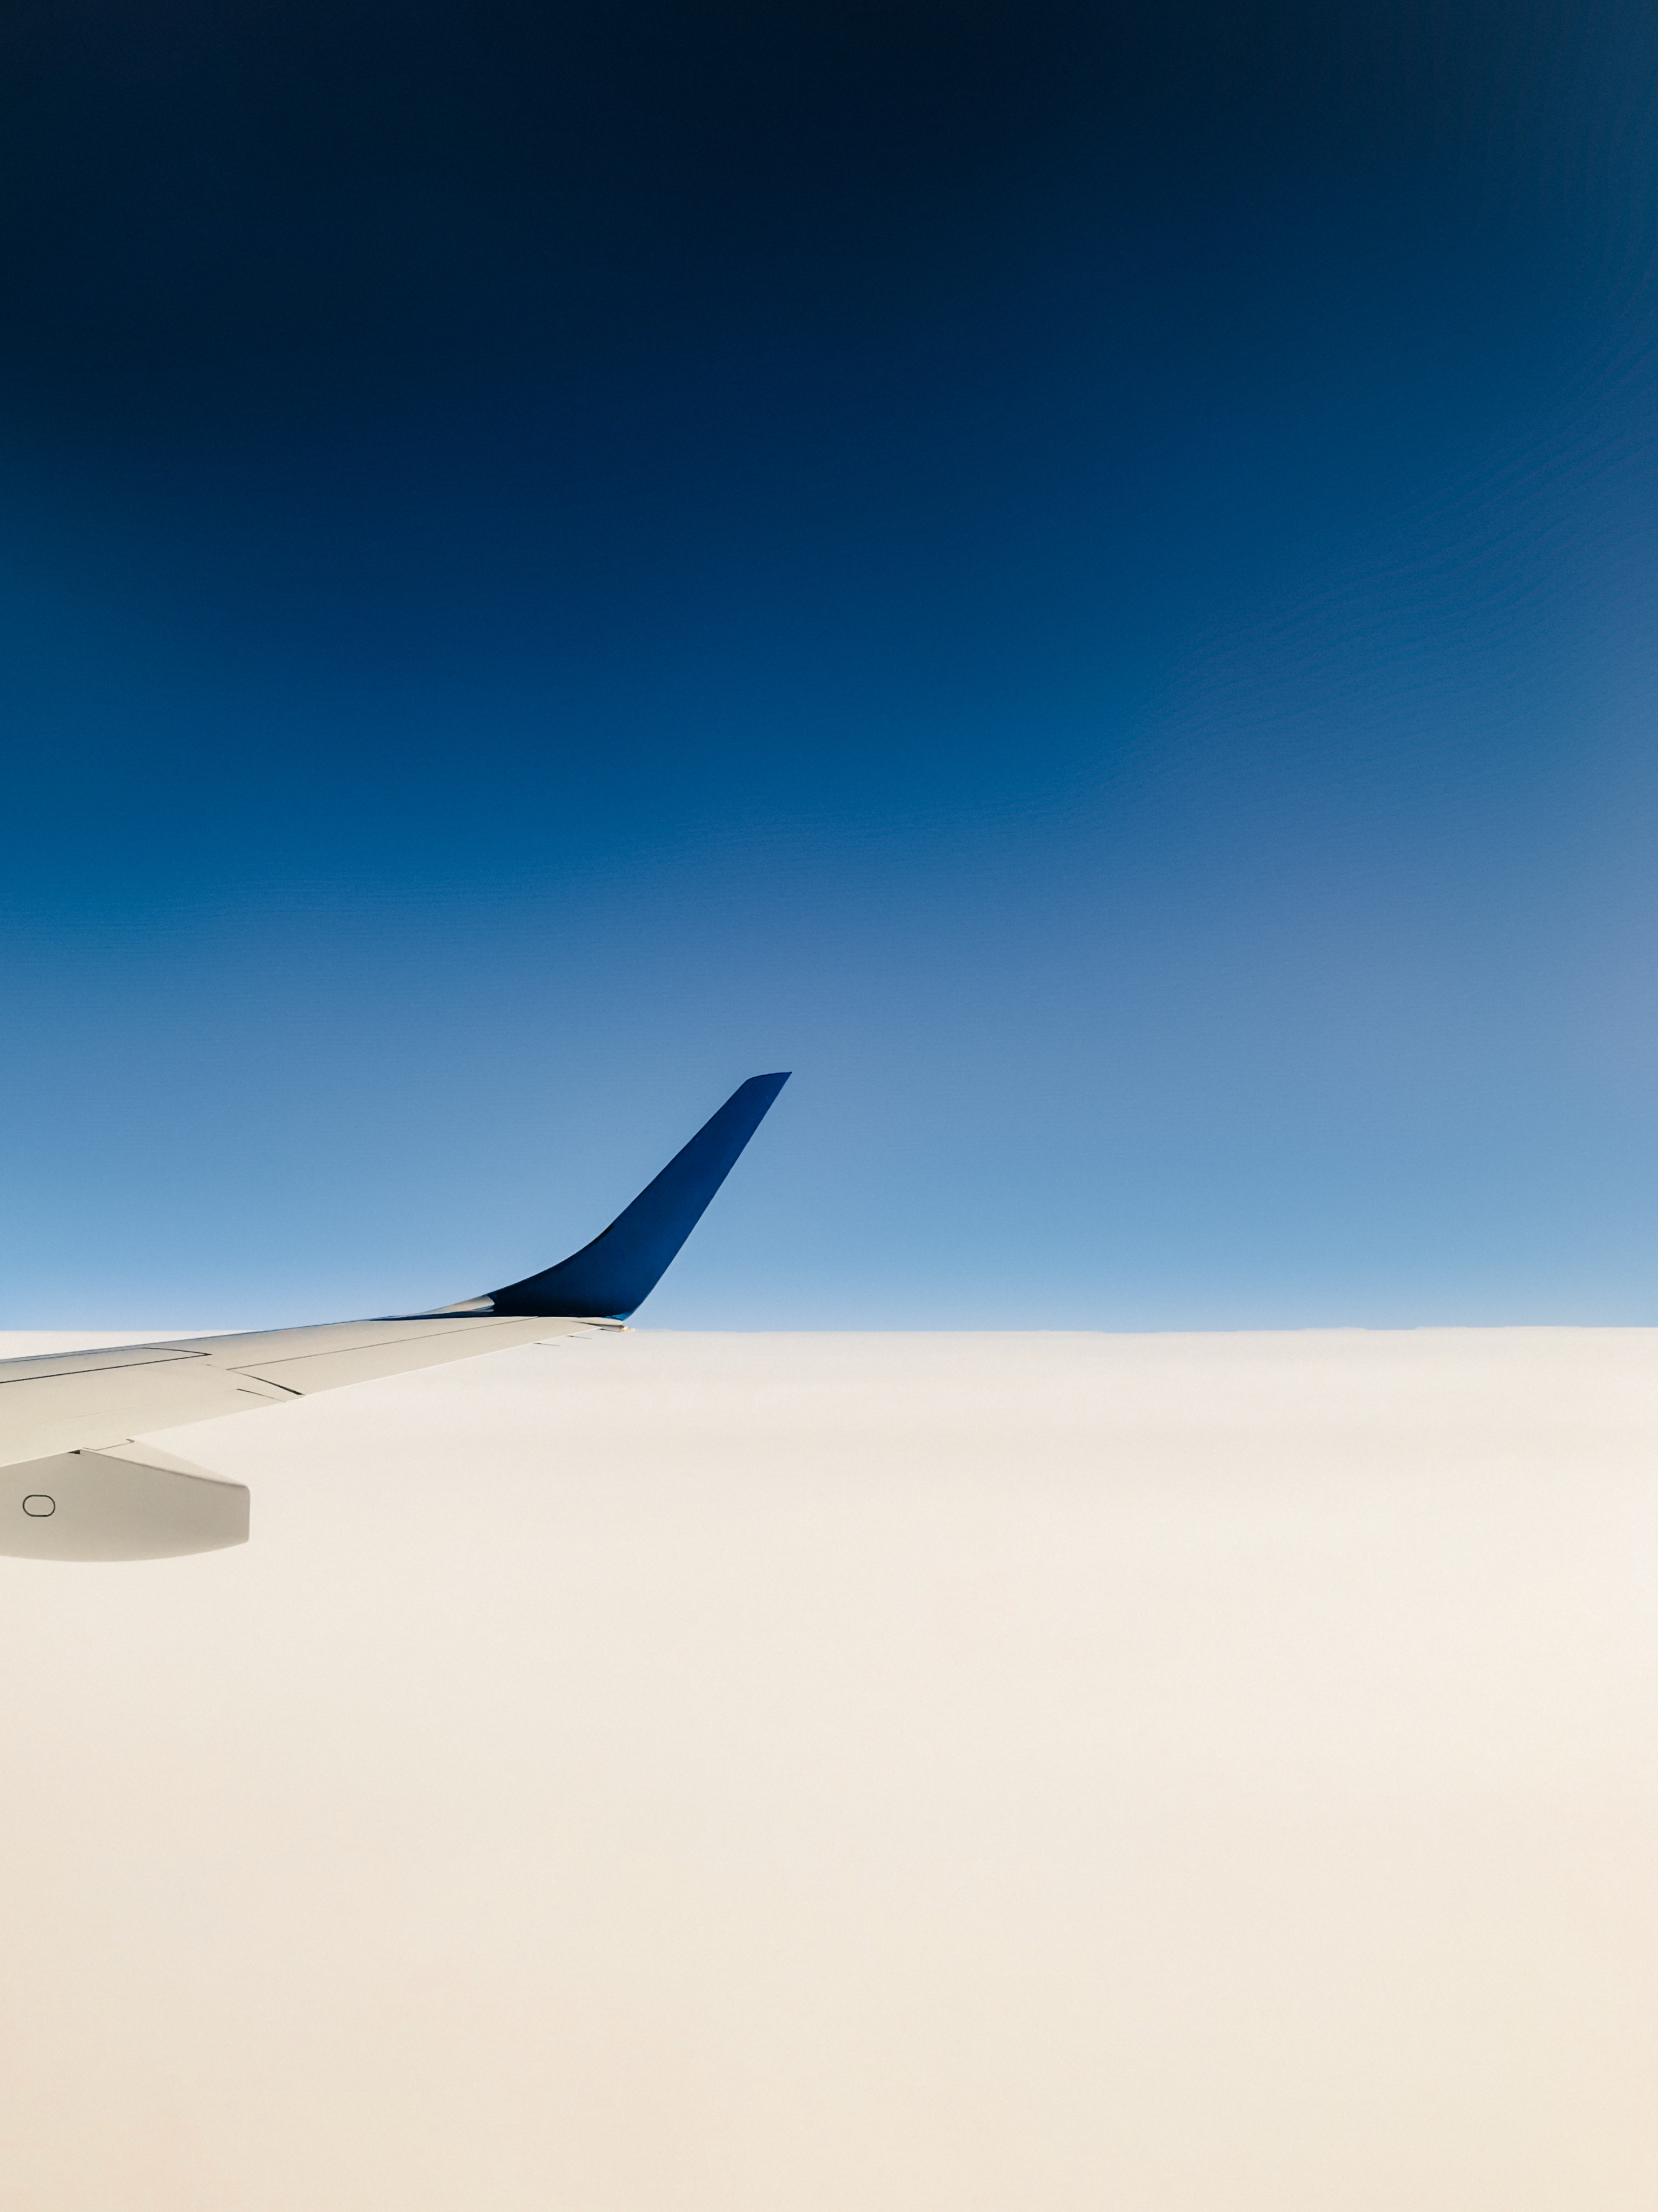 Mobile Wallpaper Minimalism blue, plane, airplane, white